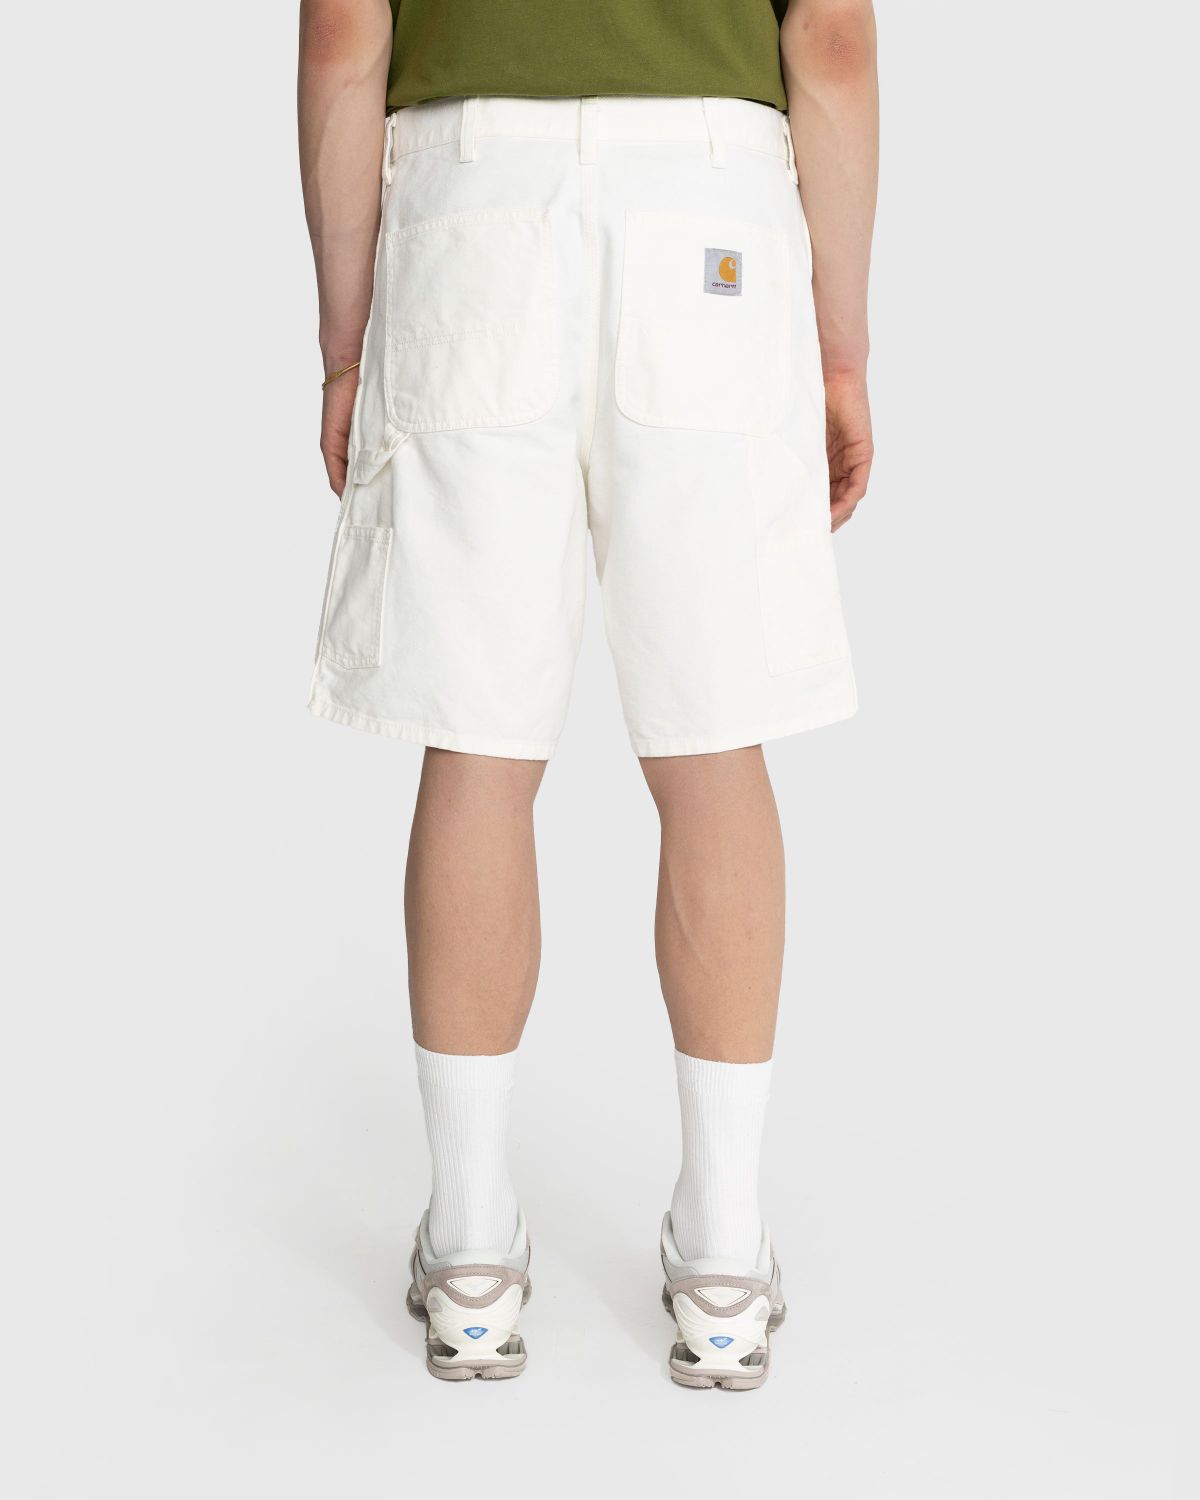 Carhartt WIP – Double Knee Short White - Shorts - Beige - Image 3